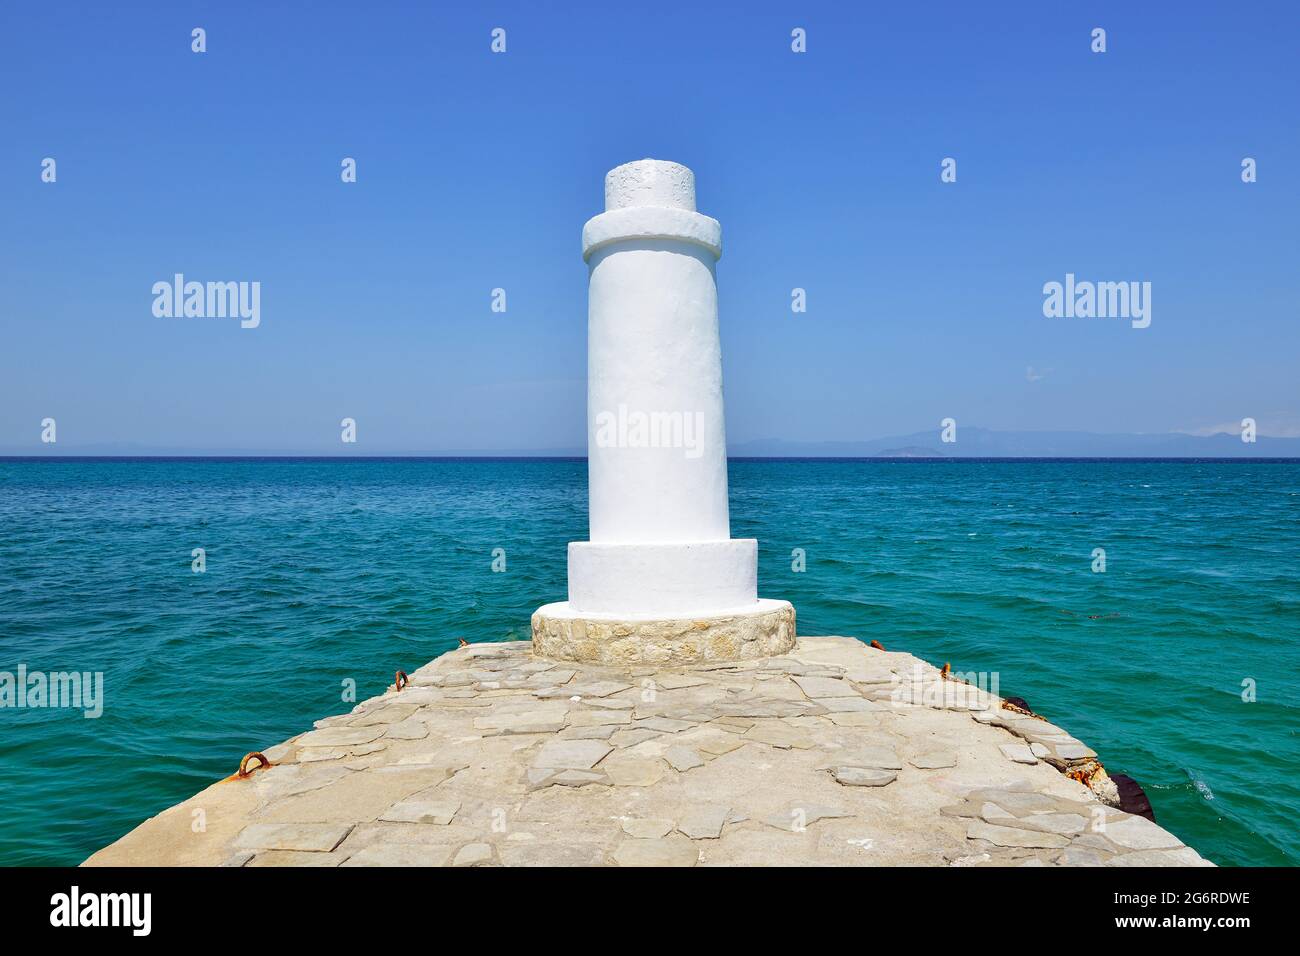 Lighthouse on the end of a pier in the Aegean Sea. Pefkohori, Kassandra, Chalkidiki, Greece Stock Photo